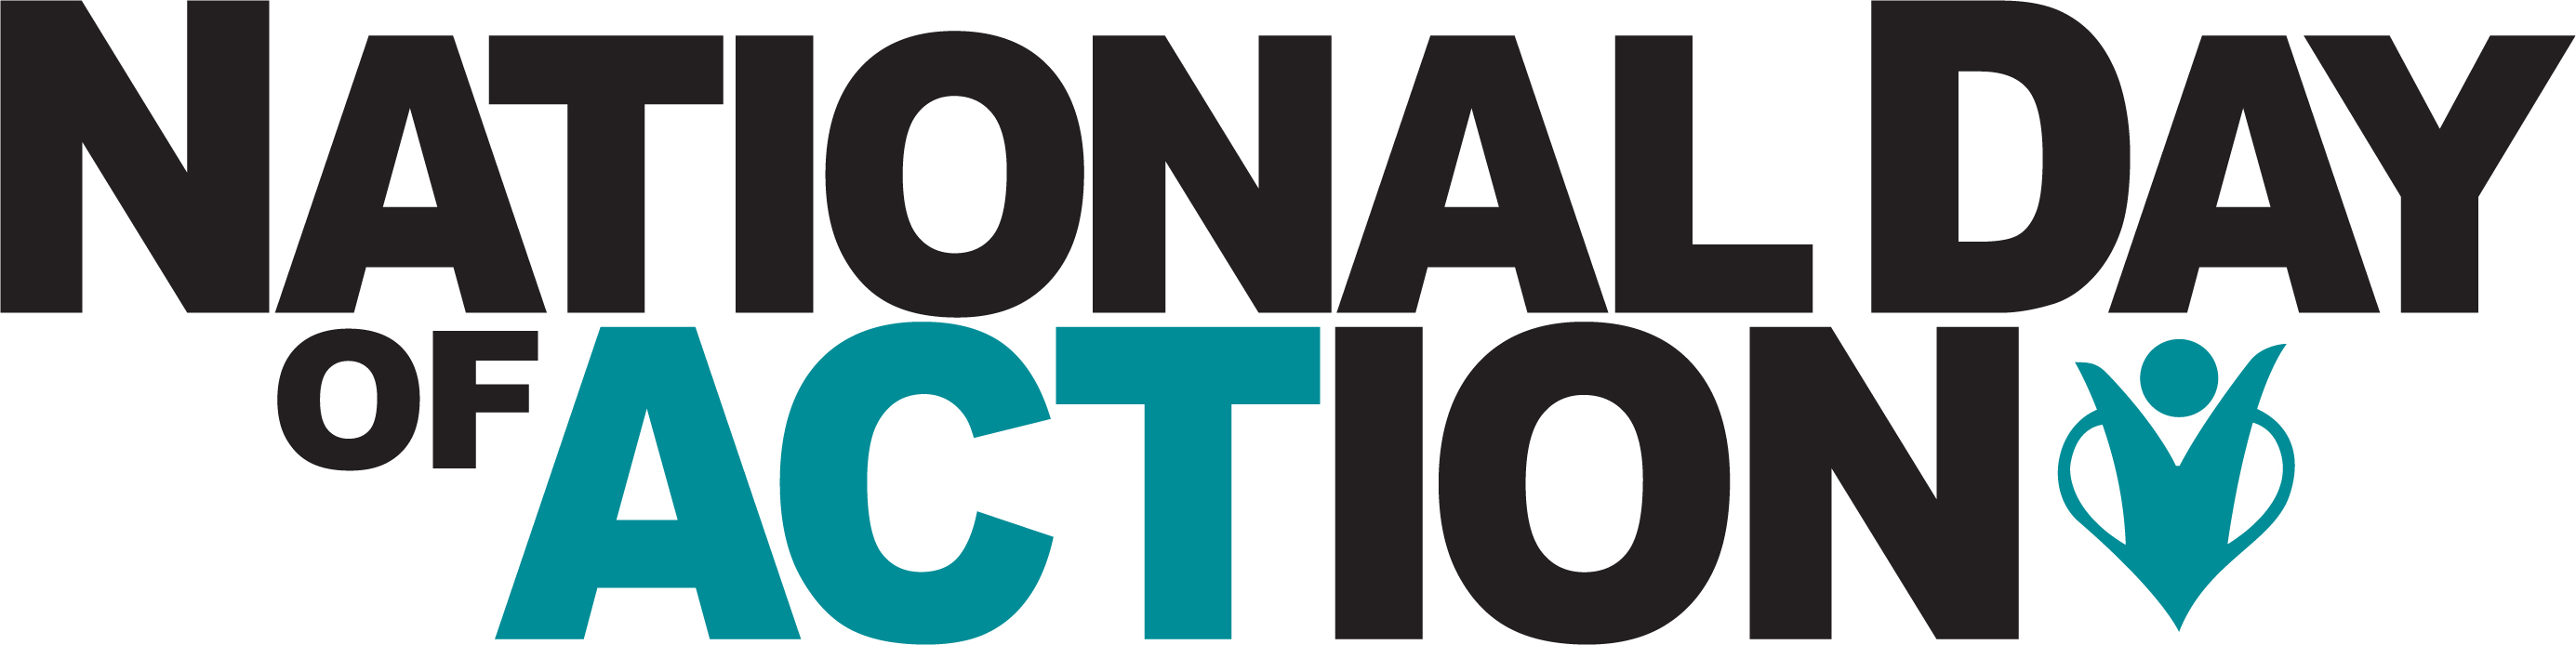 National Day of Action logo JPG no border